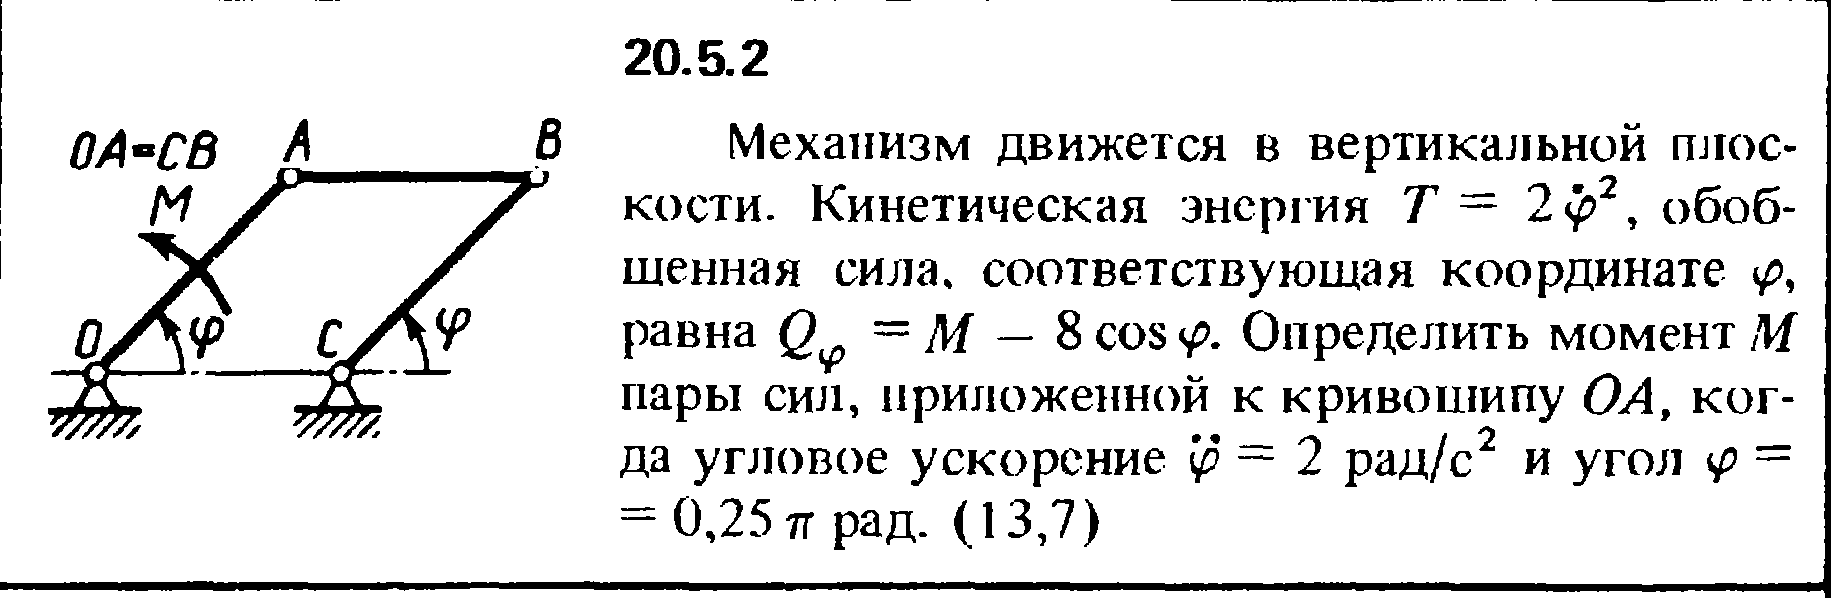 Решение 20.5.2 из сборника (решебника) Кепе О.Е. 1989